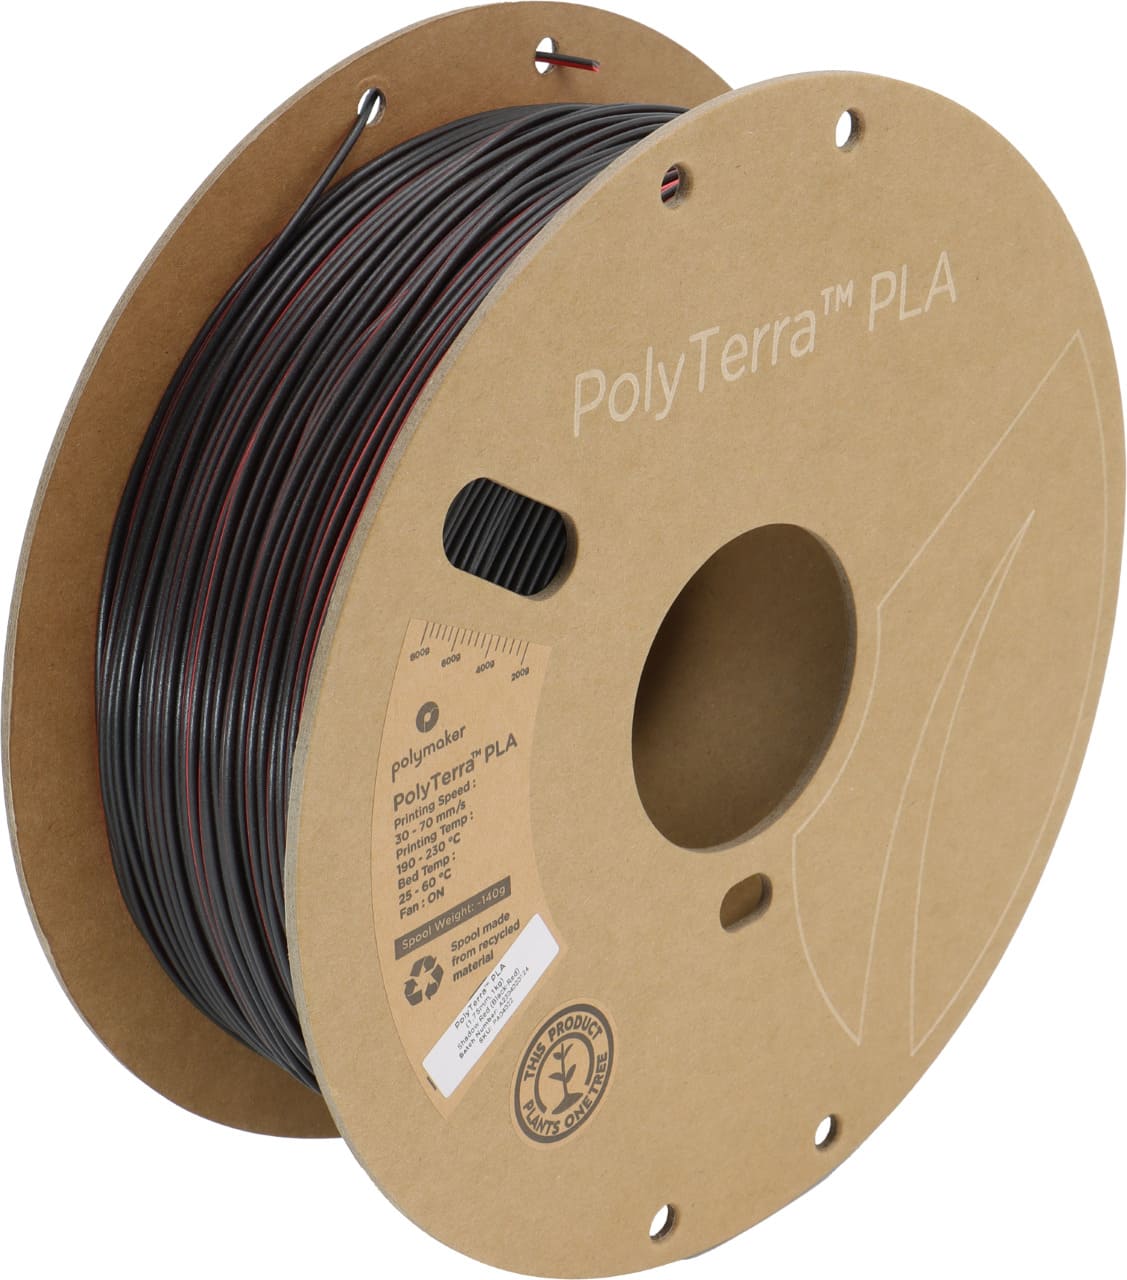 Polymaker PolyTerra PLA Filament 1.75mm 1kg